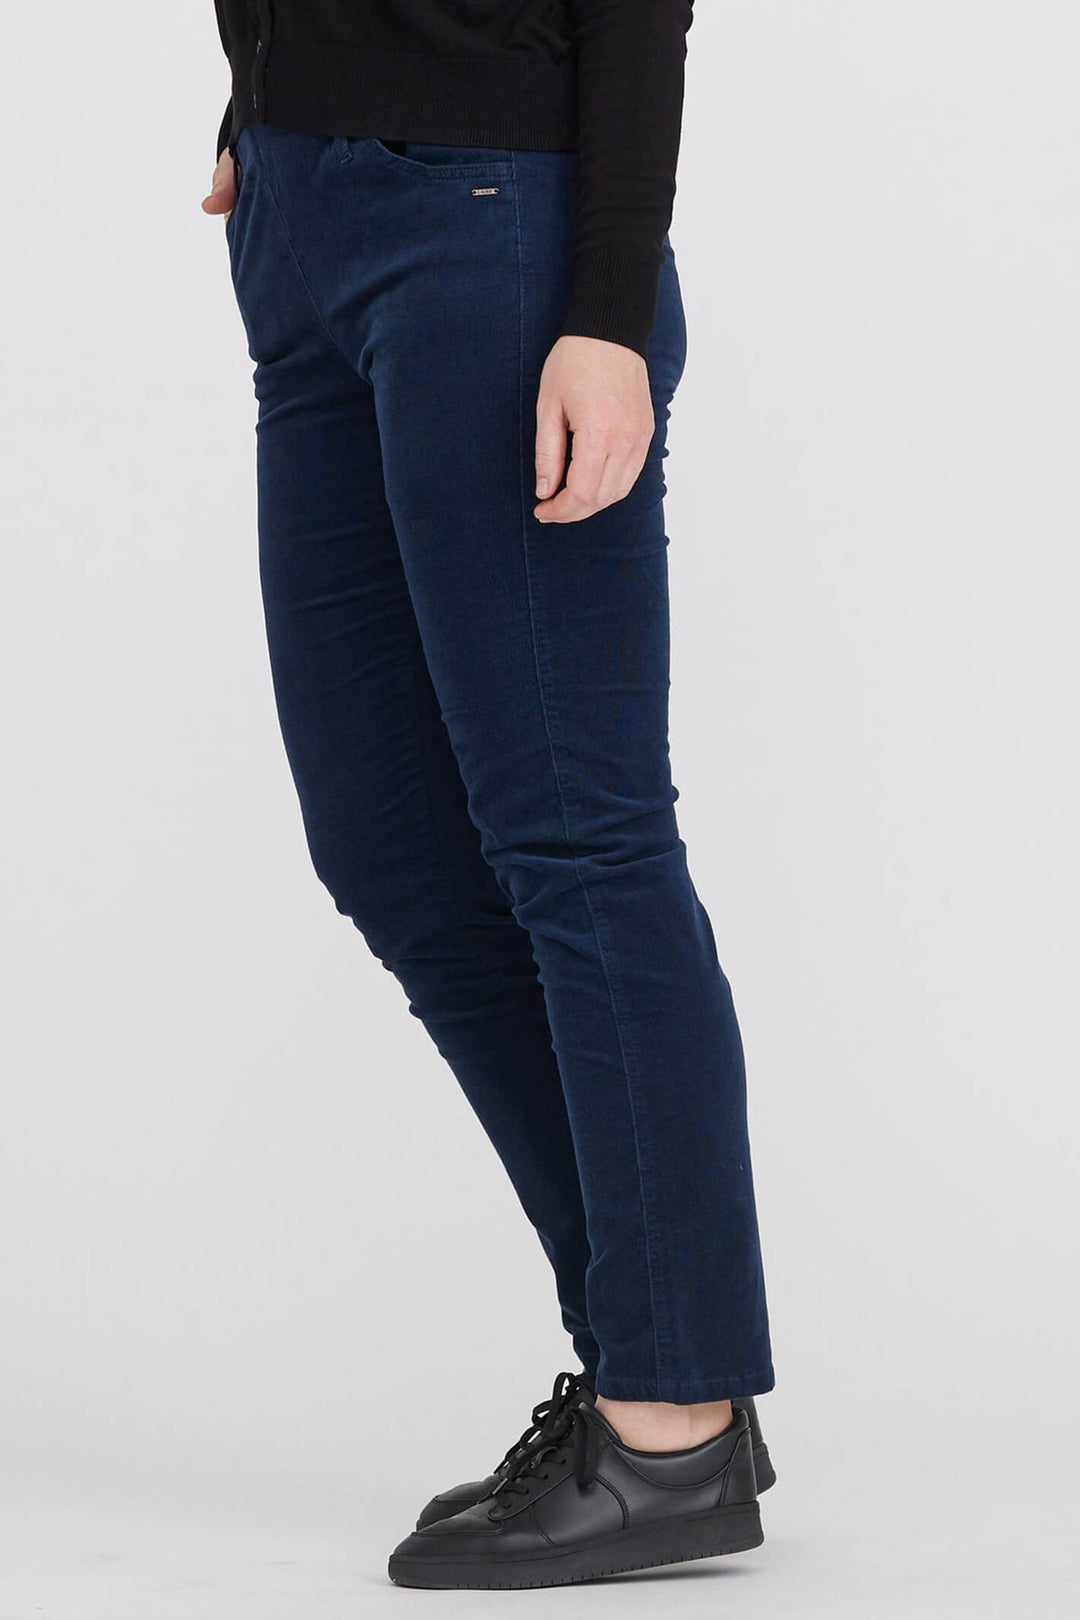 LauRie 100422 47000 Kelly Medium Length Blue Corduroy Jeans - Shirley Allum Boutique